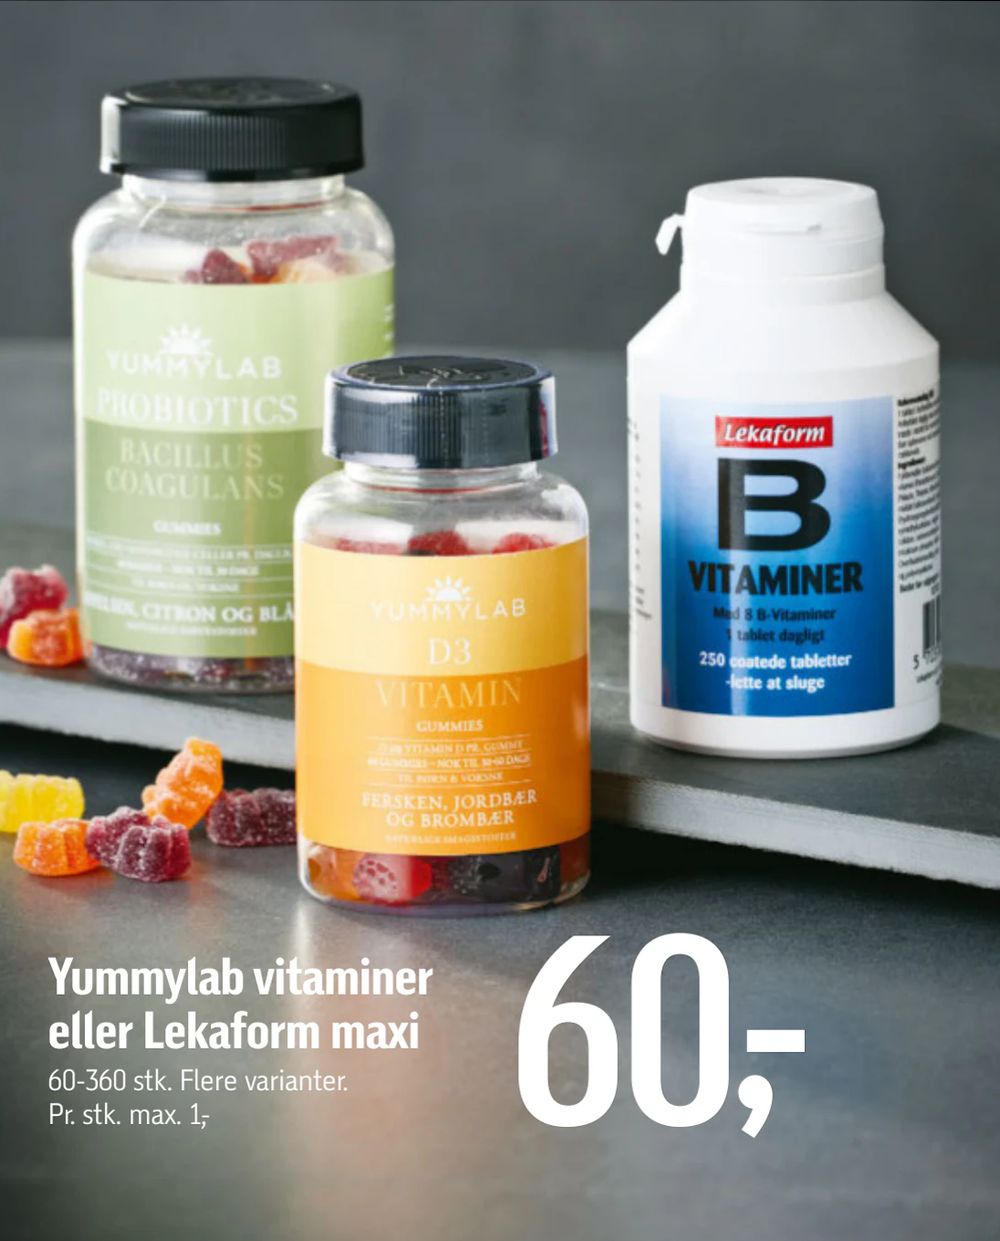 Tilbud på Yummylab vitaminer eller Lekaform maxi fra føtex til 60 kr.